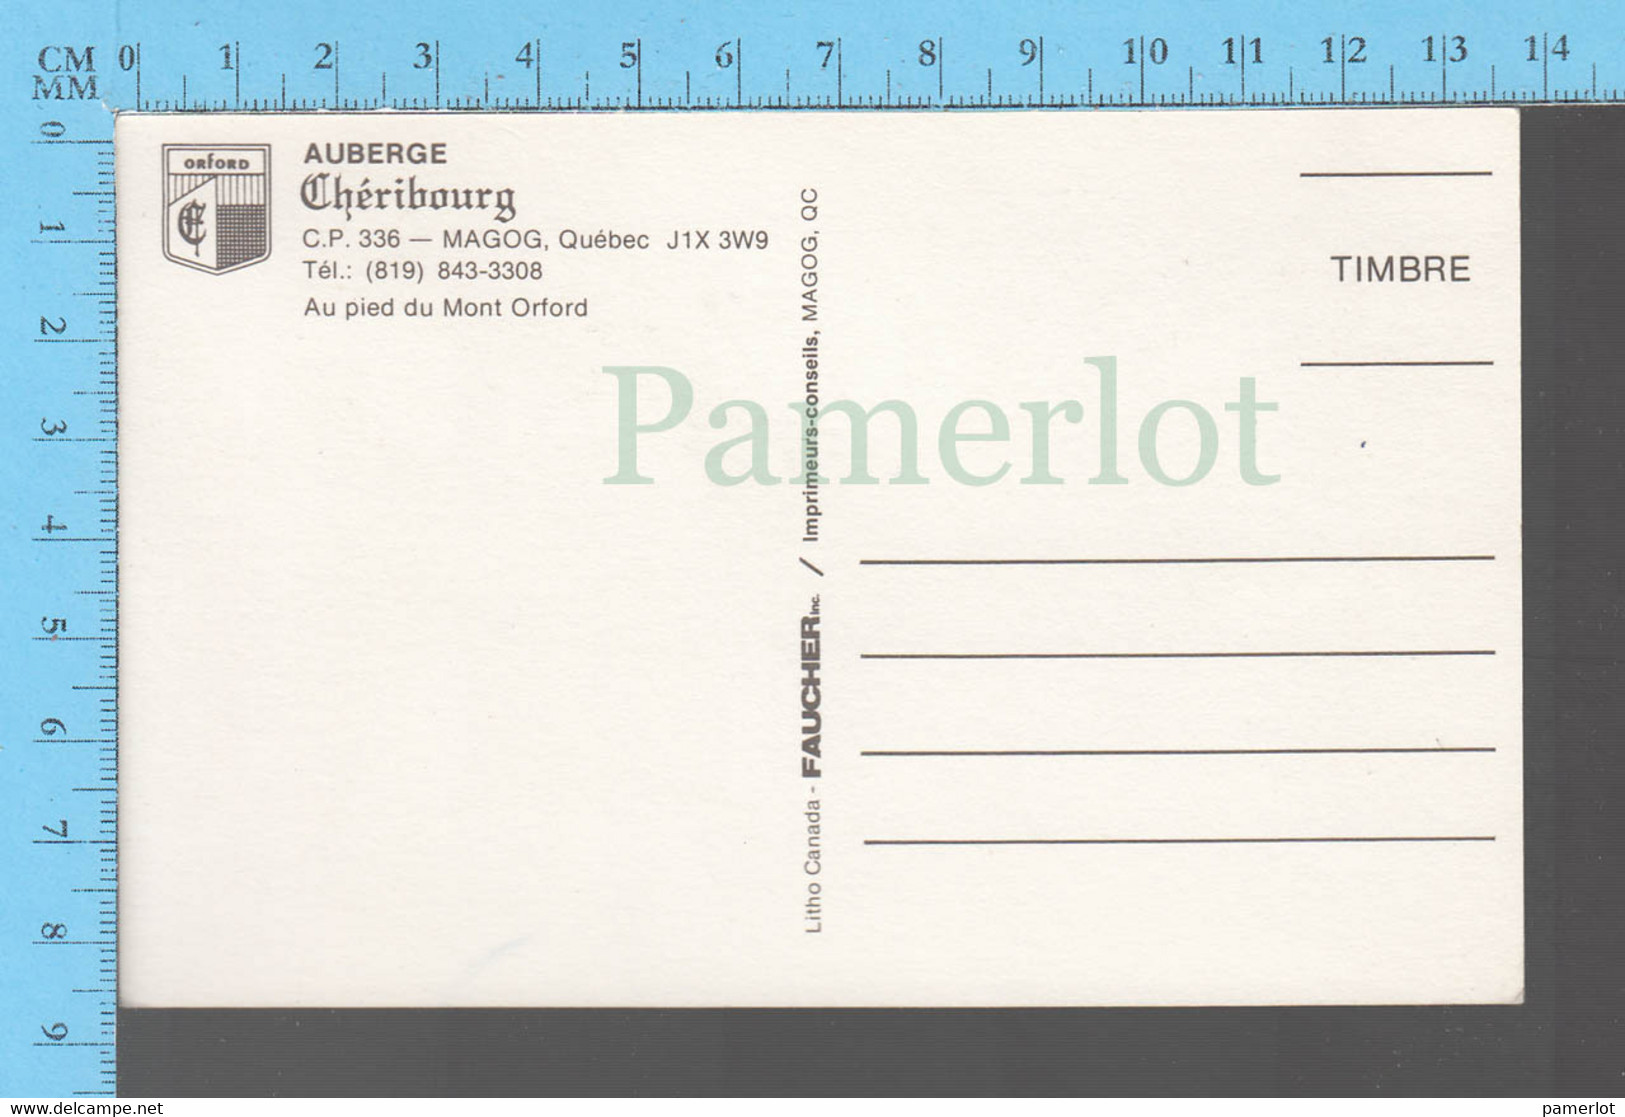 Magog P.Q Canada - Auberge Cheribour, Carte Postale Post Card, Cpm - Cartes Modernes